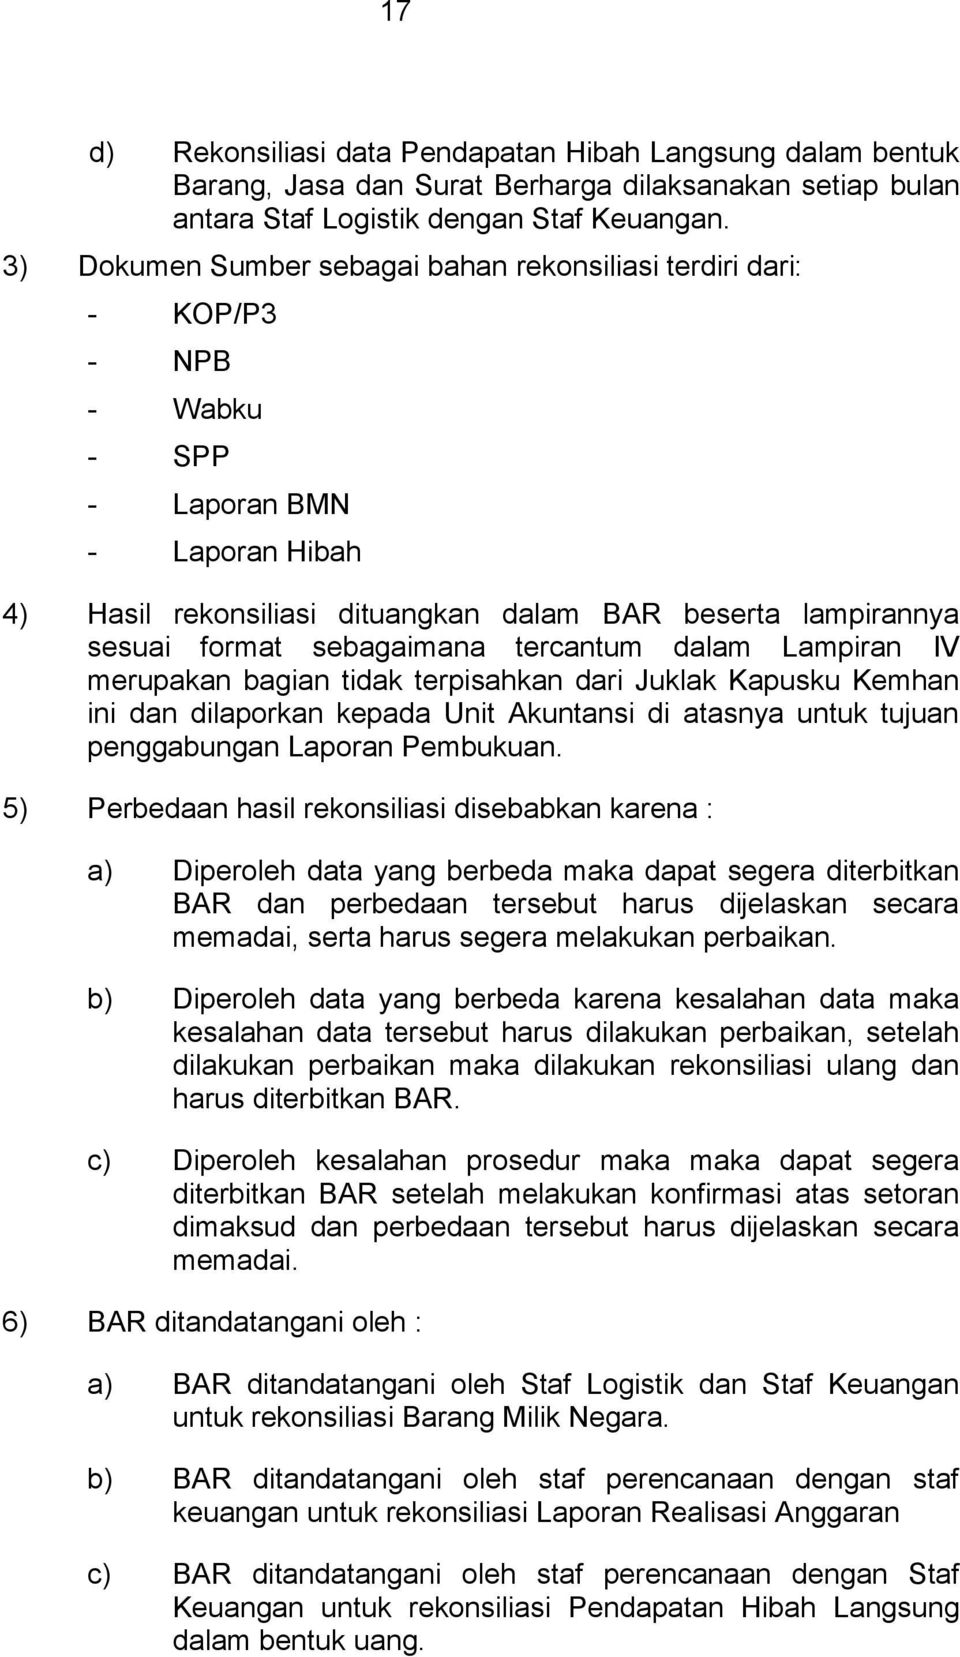 sebagaimana tercantum dalam Lampiran IV merupakan bagian tidak terpisahkan dari Juklak Kapusku Kemhan ini dan dilaporkan kepada Unit Akuntansi di atasnya untuk tujuan penggabungan Laporan Pembukuan.